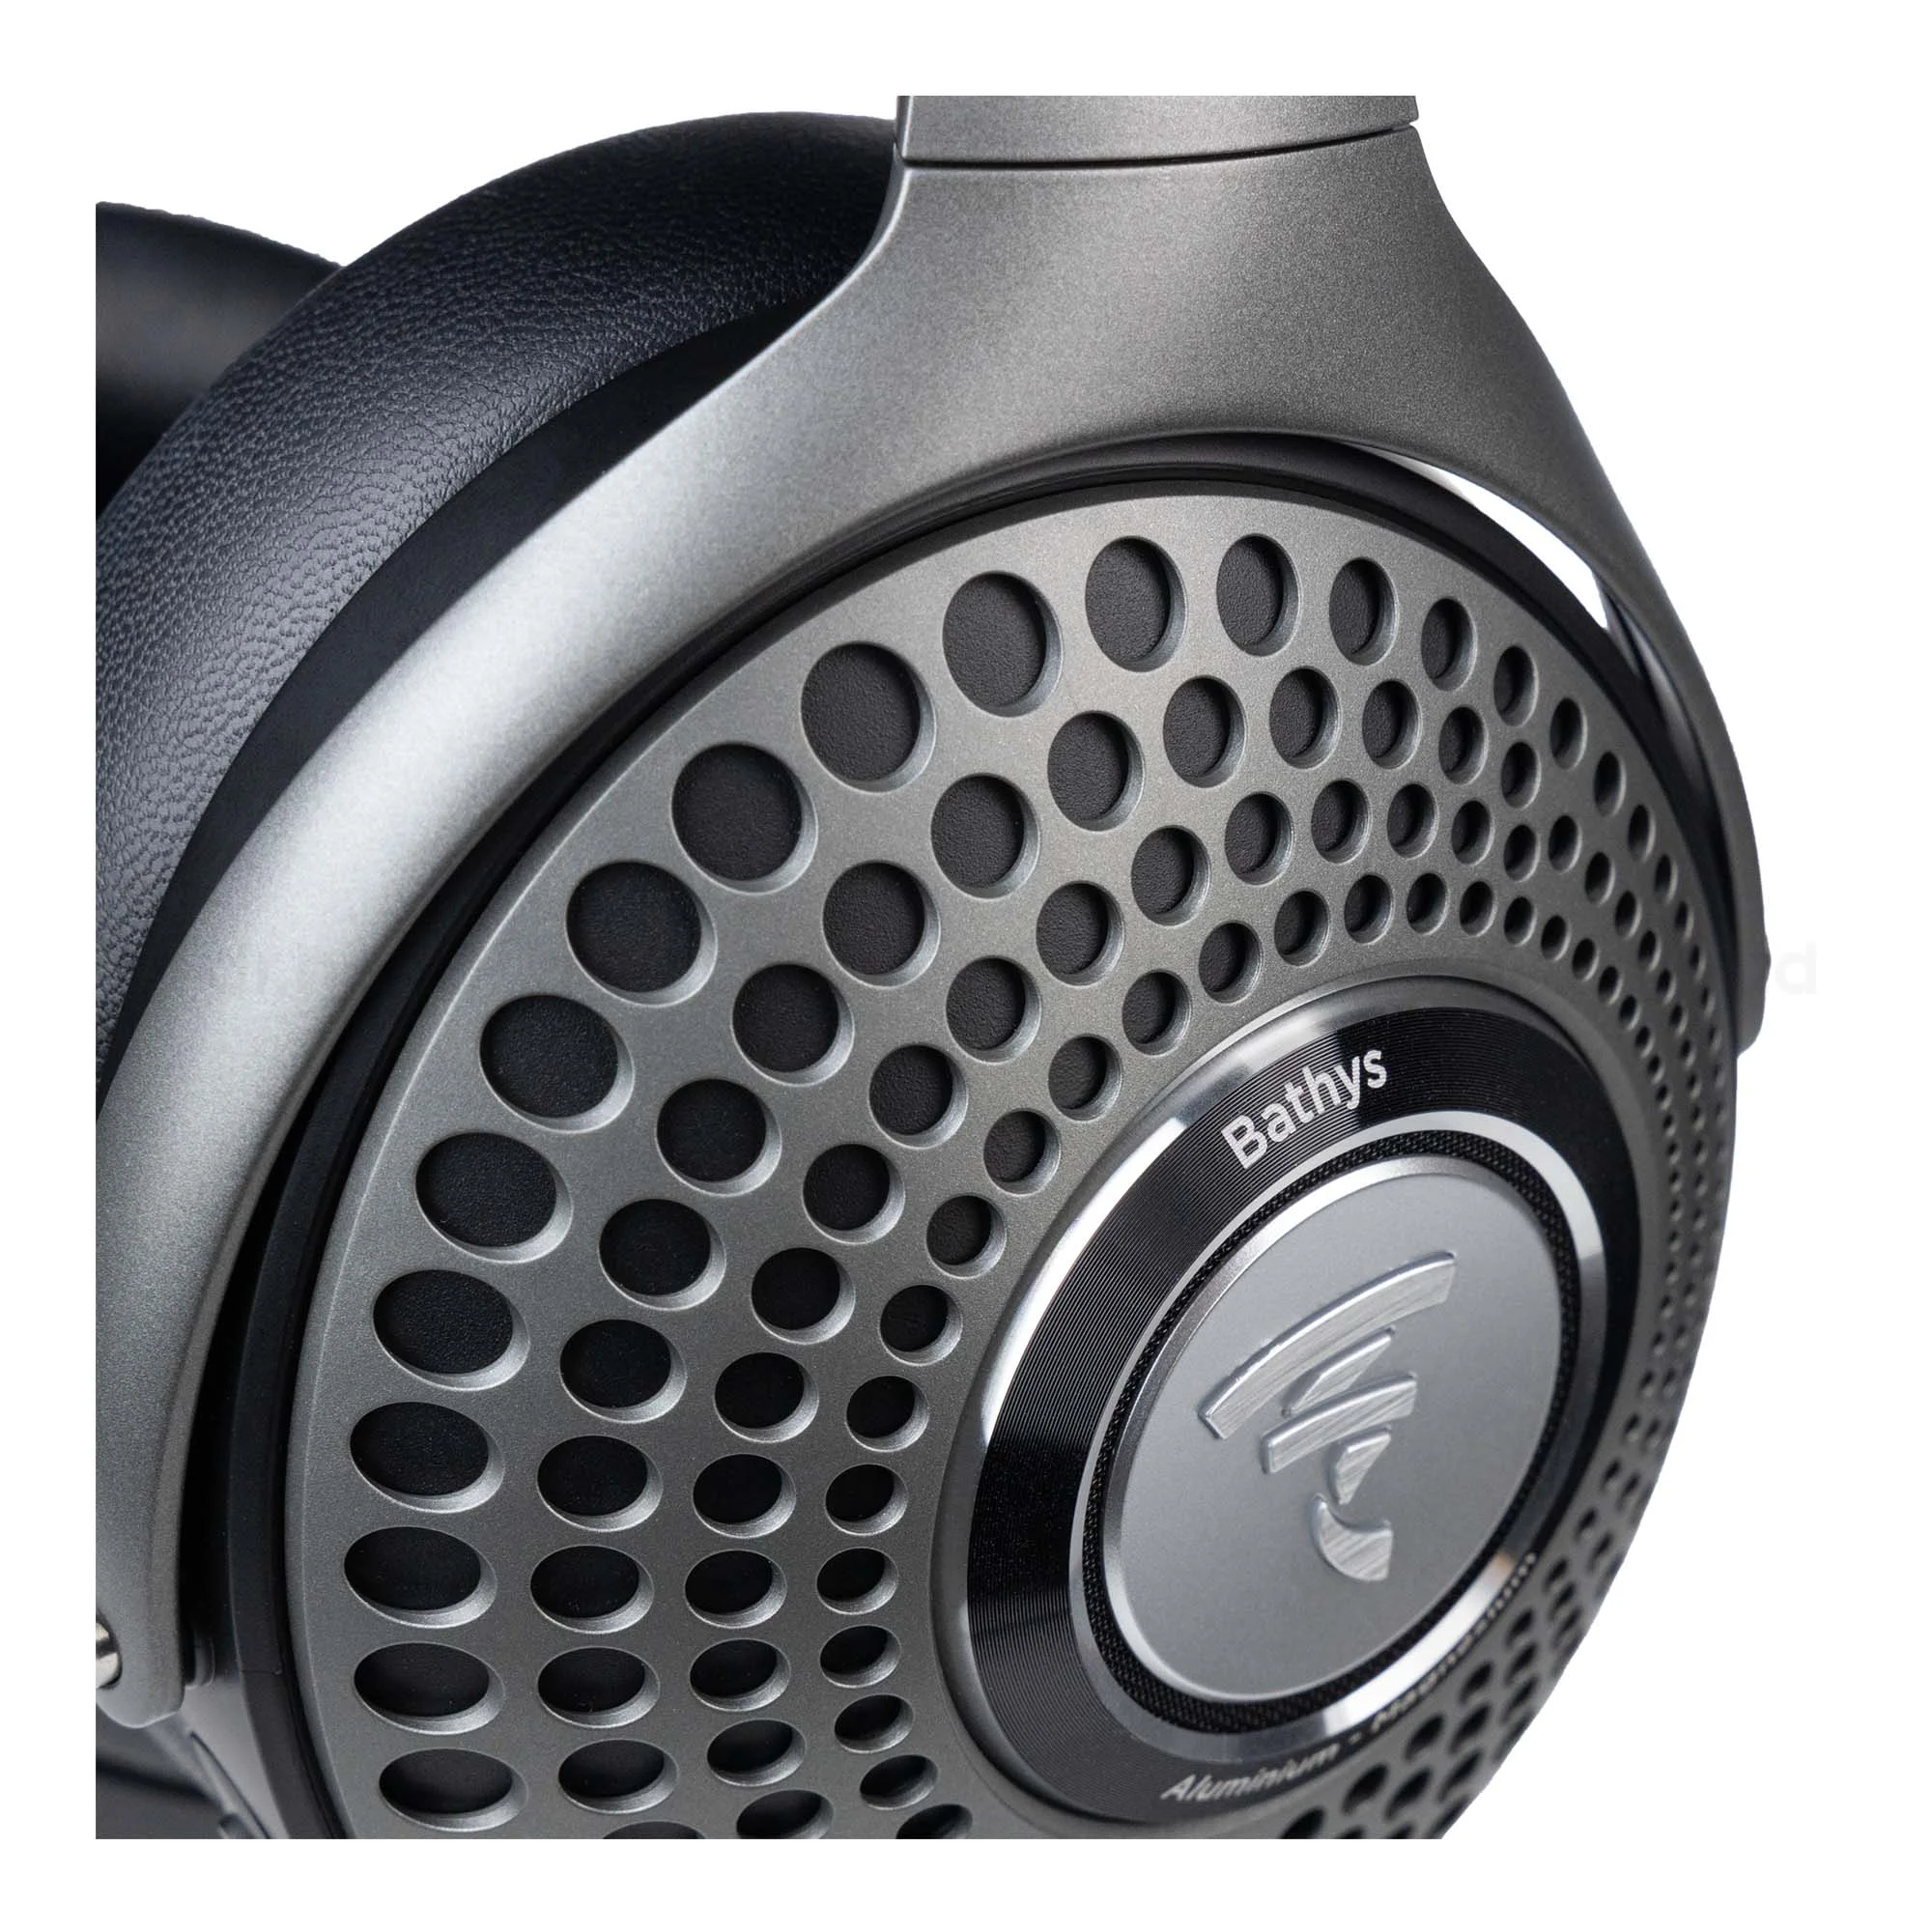 Комплект Focal Bathys + Oehlbach In Fascenatio Headphone Stand Black Bathys + Oehlbach In Fascenatio Headphone Stand Black - фото 6